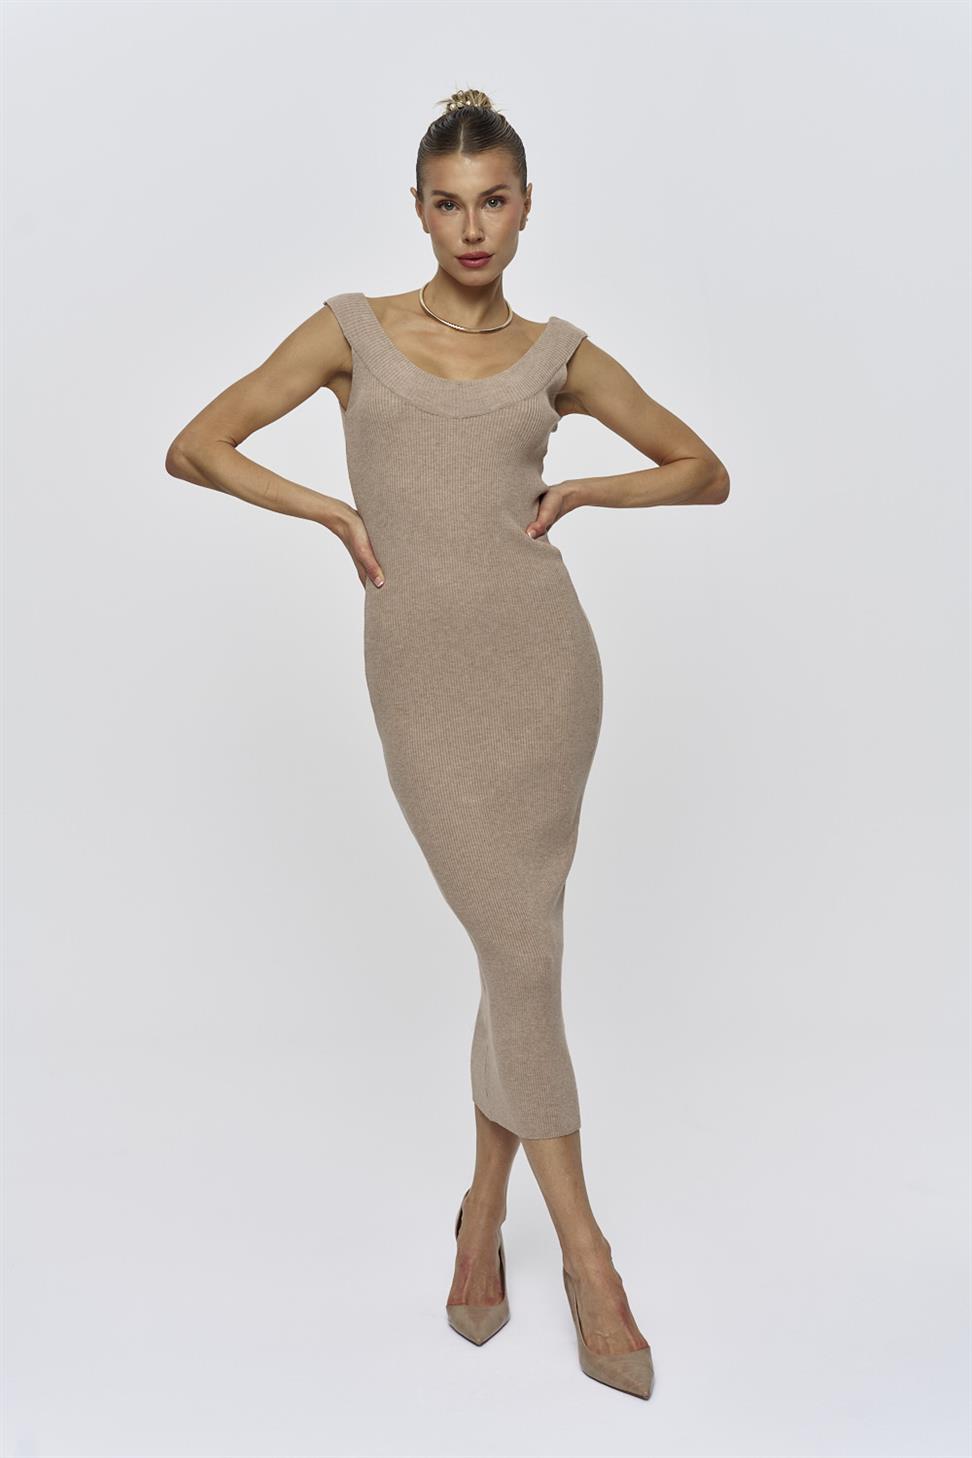 New Season Women's Dress Models and Prices | Tuba Butik